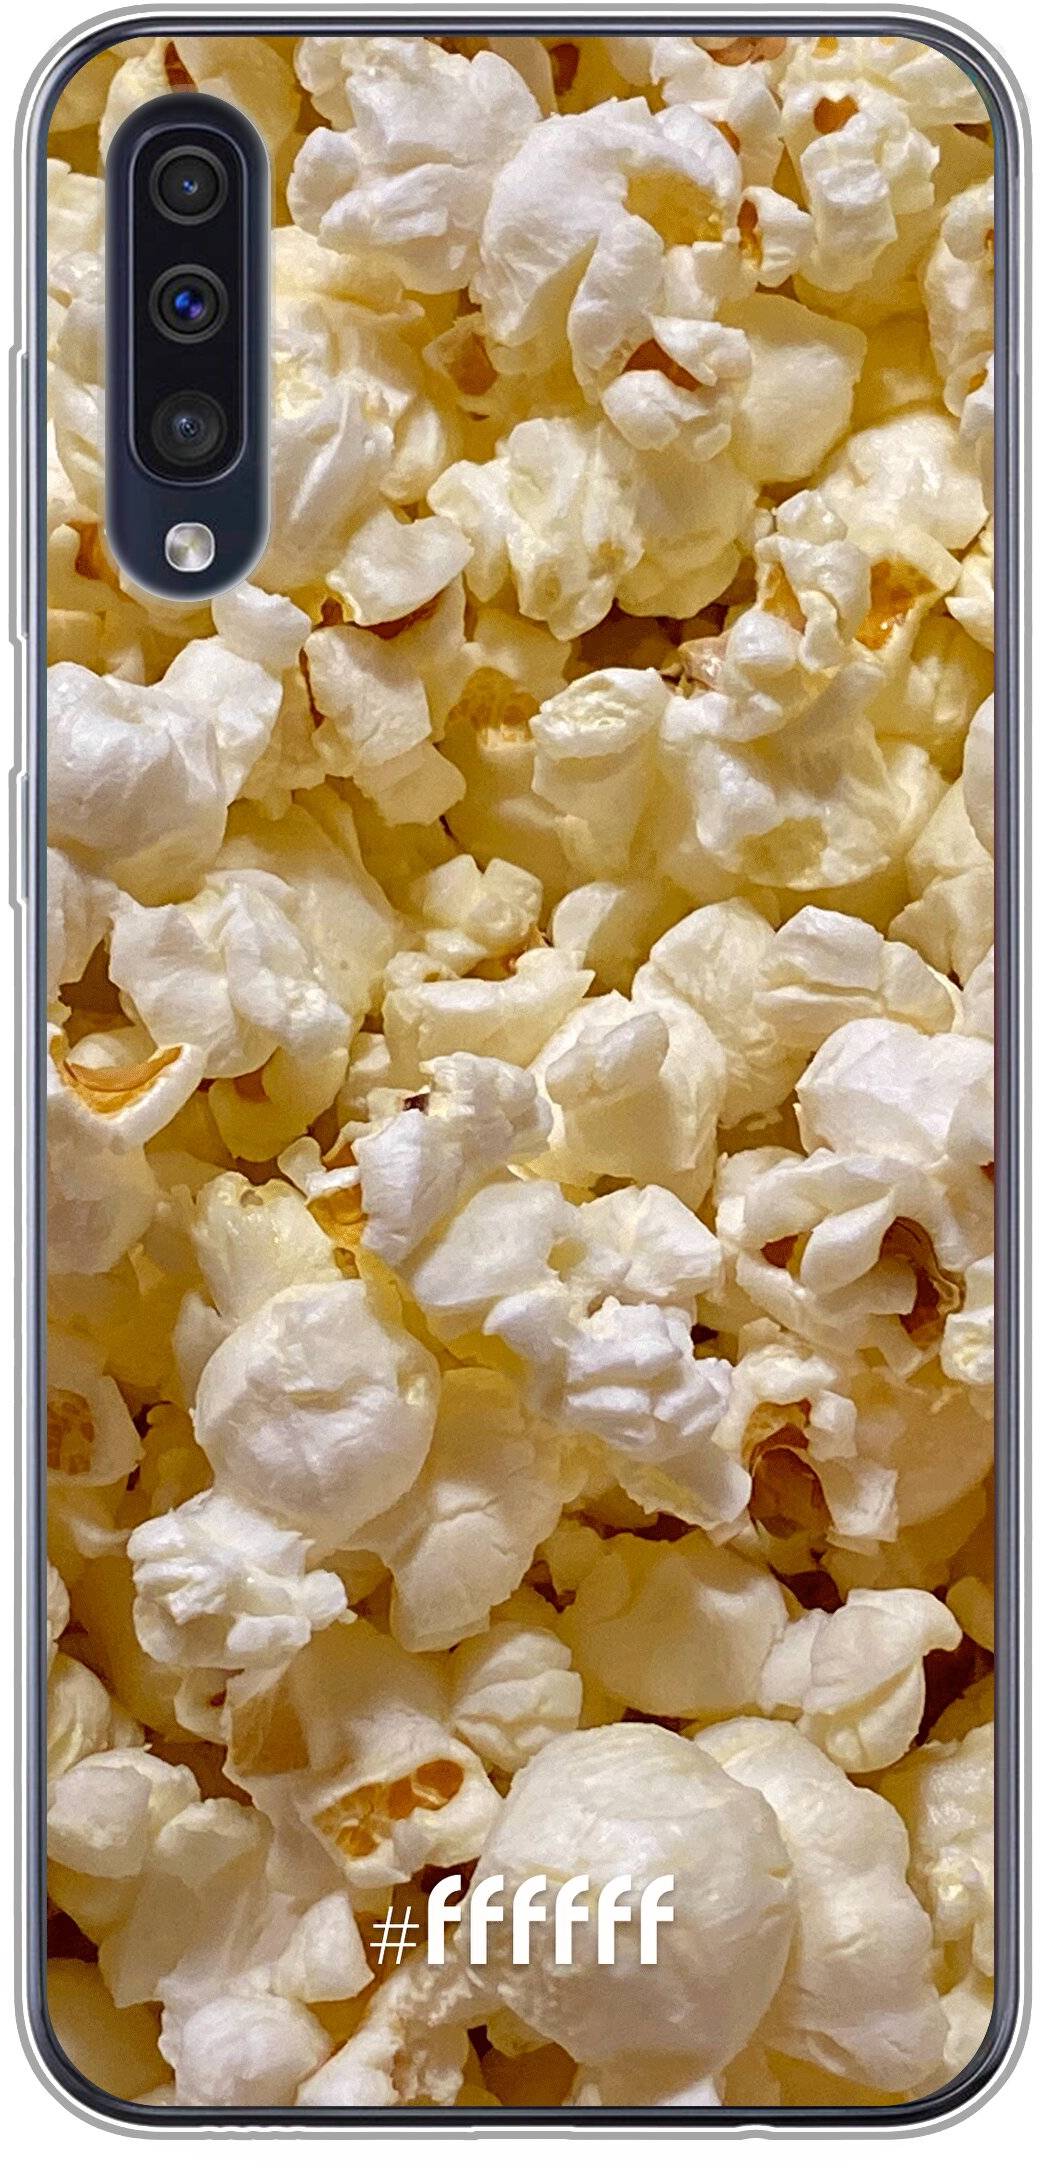 Popcorn Galaxy A30s